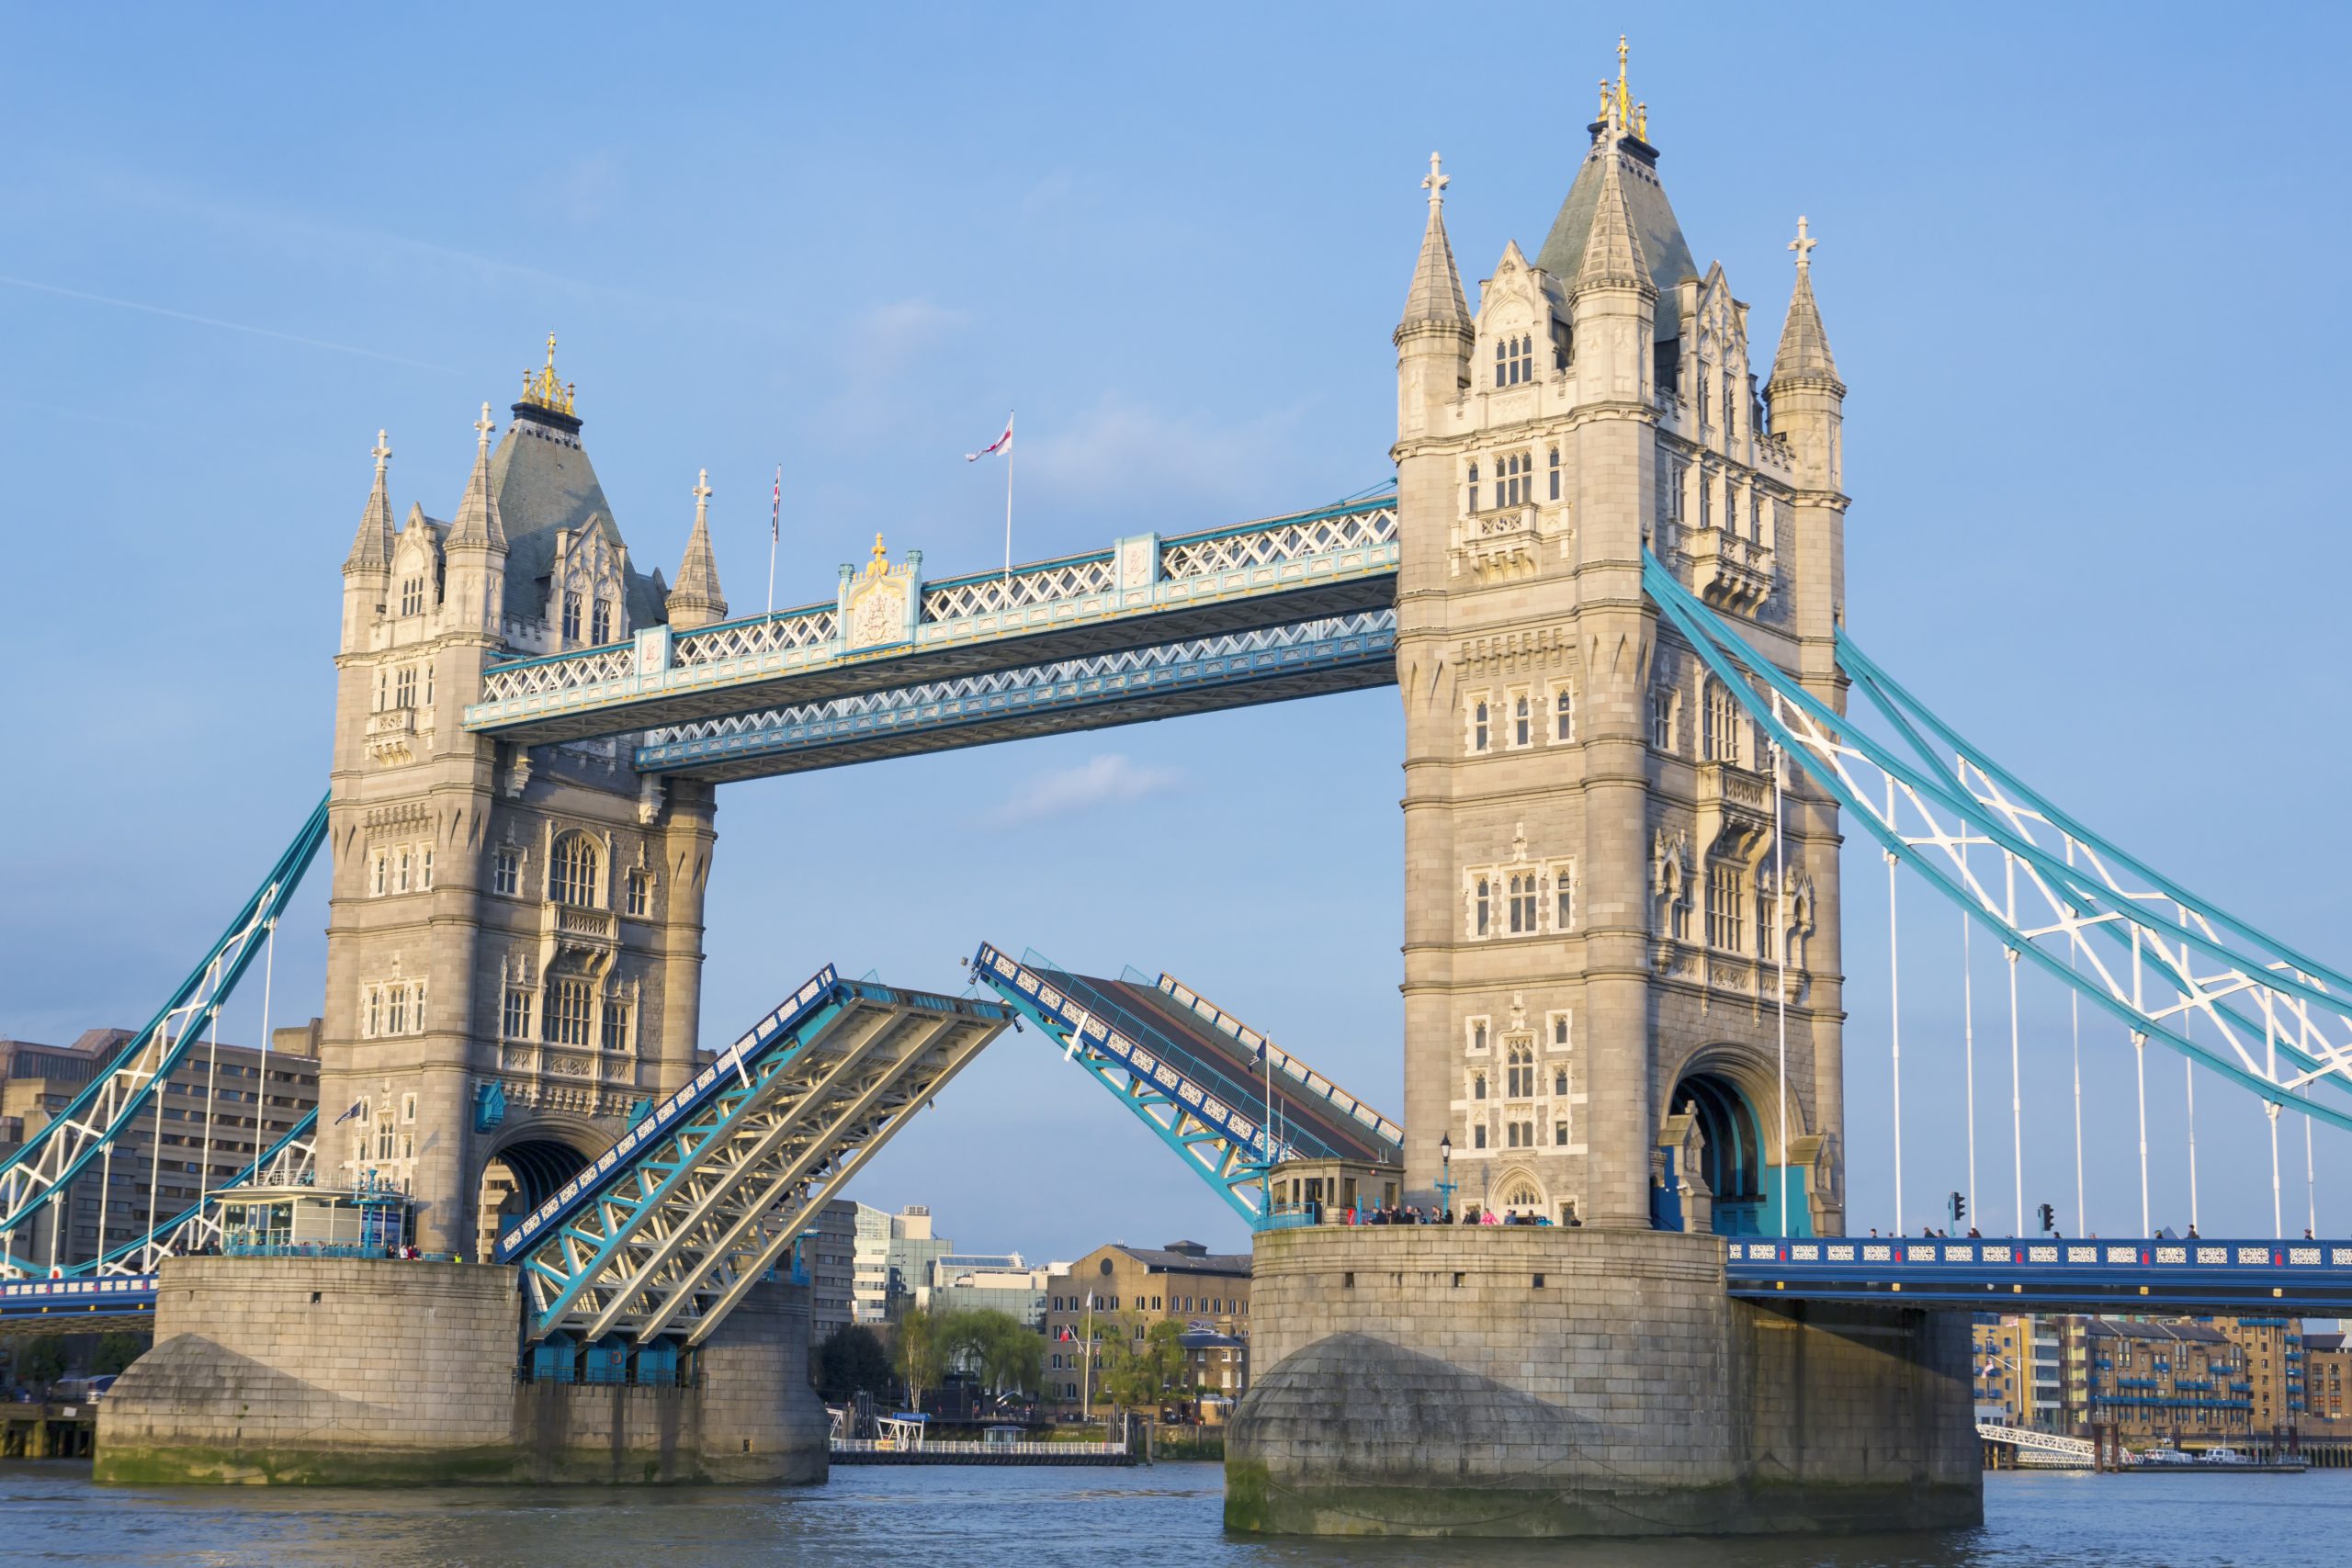 Tower Bridge in England